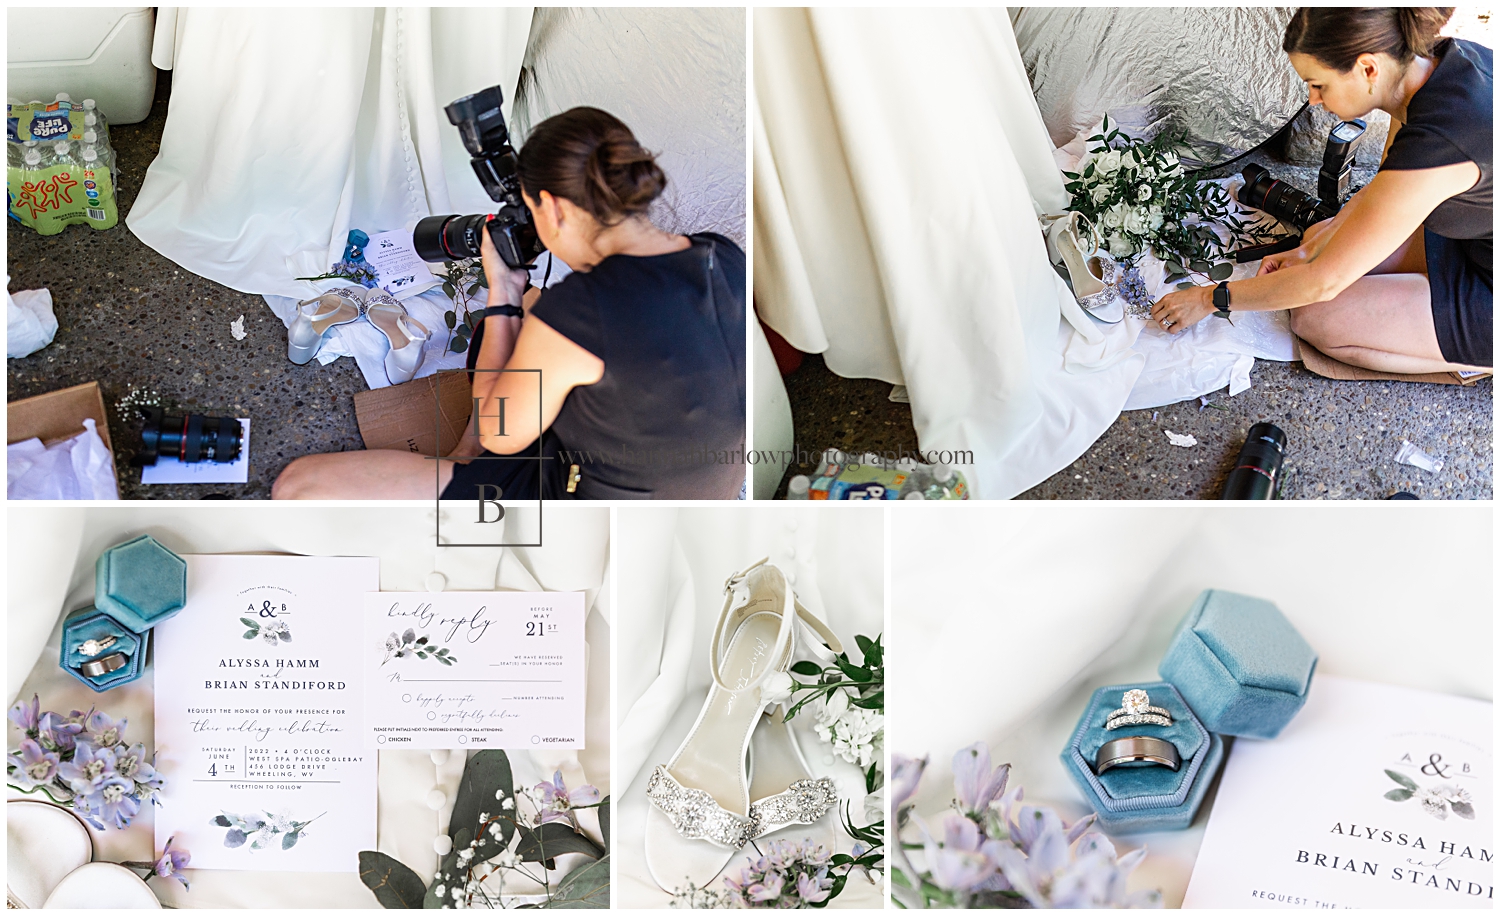 Wedding photographer taking photos of bridal details